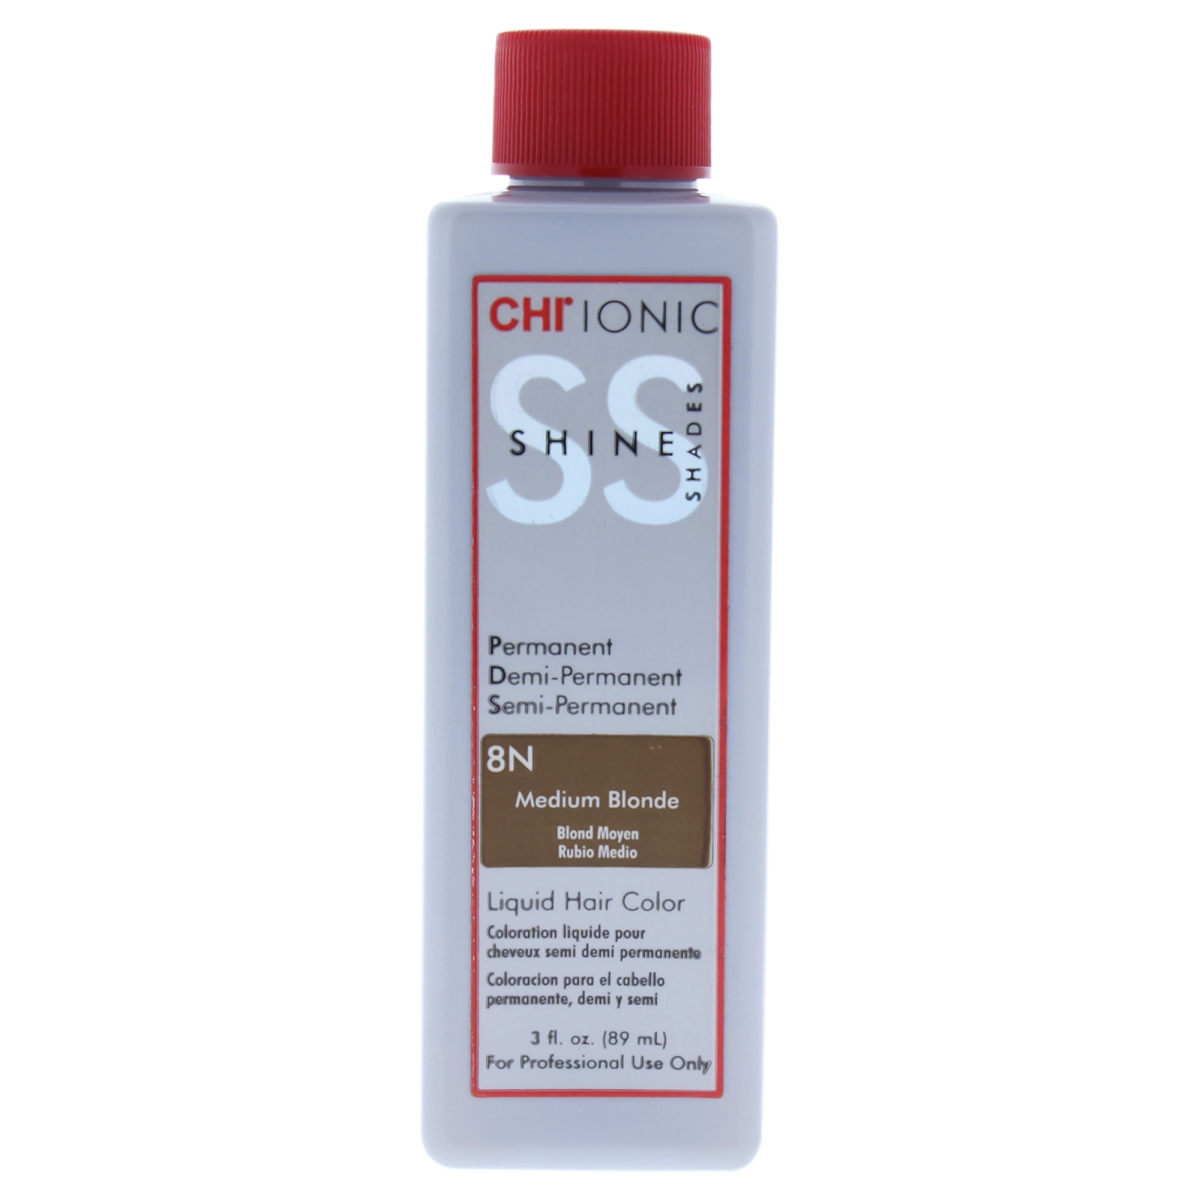 I0084047 Ionic Shine Shades Liquid Hair Color For Unisex - 8n Medium Blonde - 3 Oz